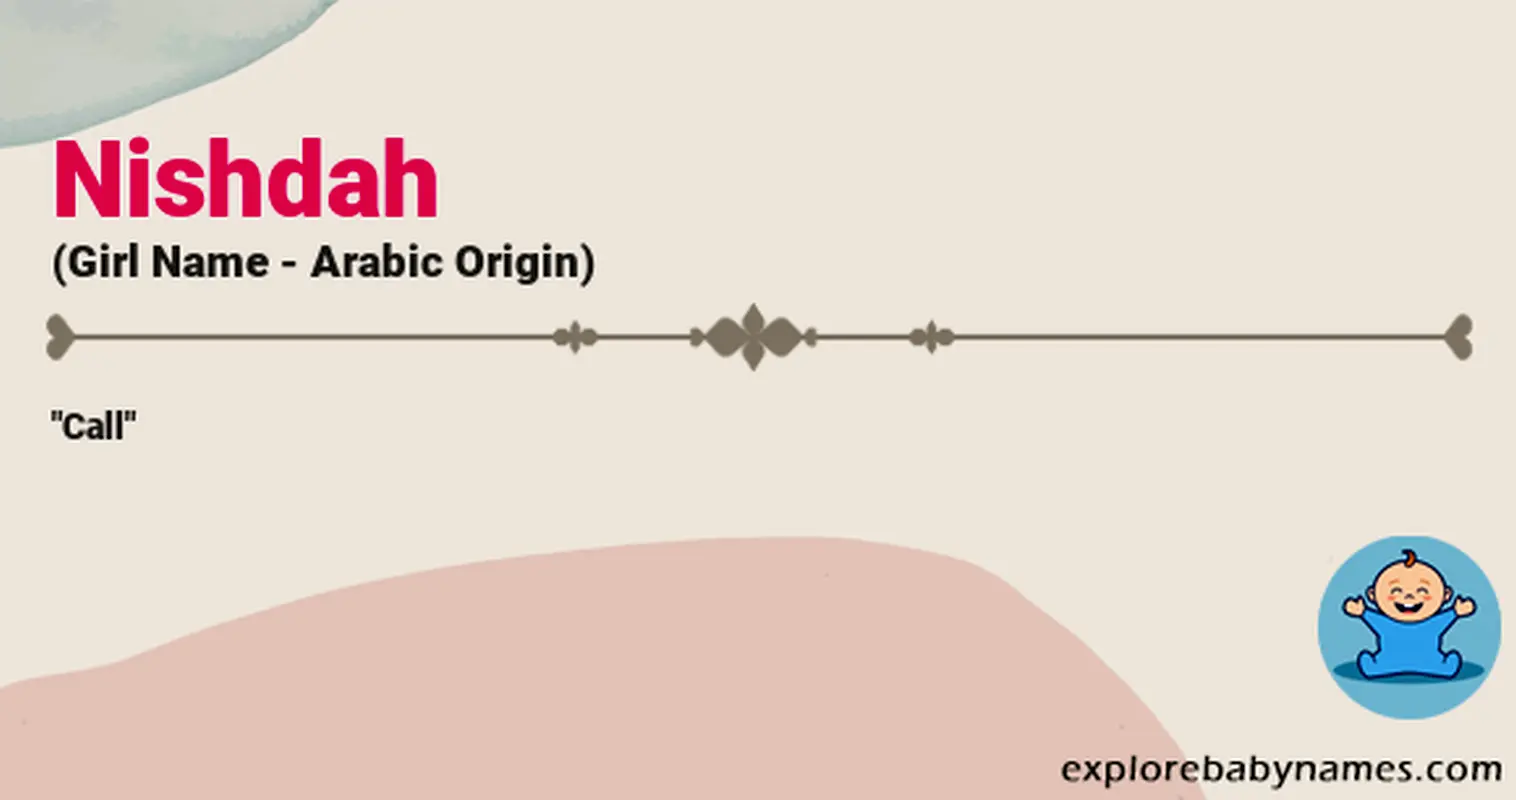 Meaning of Nishdah